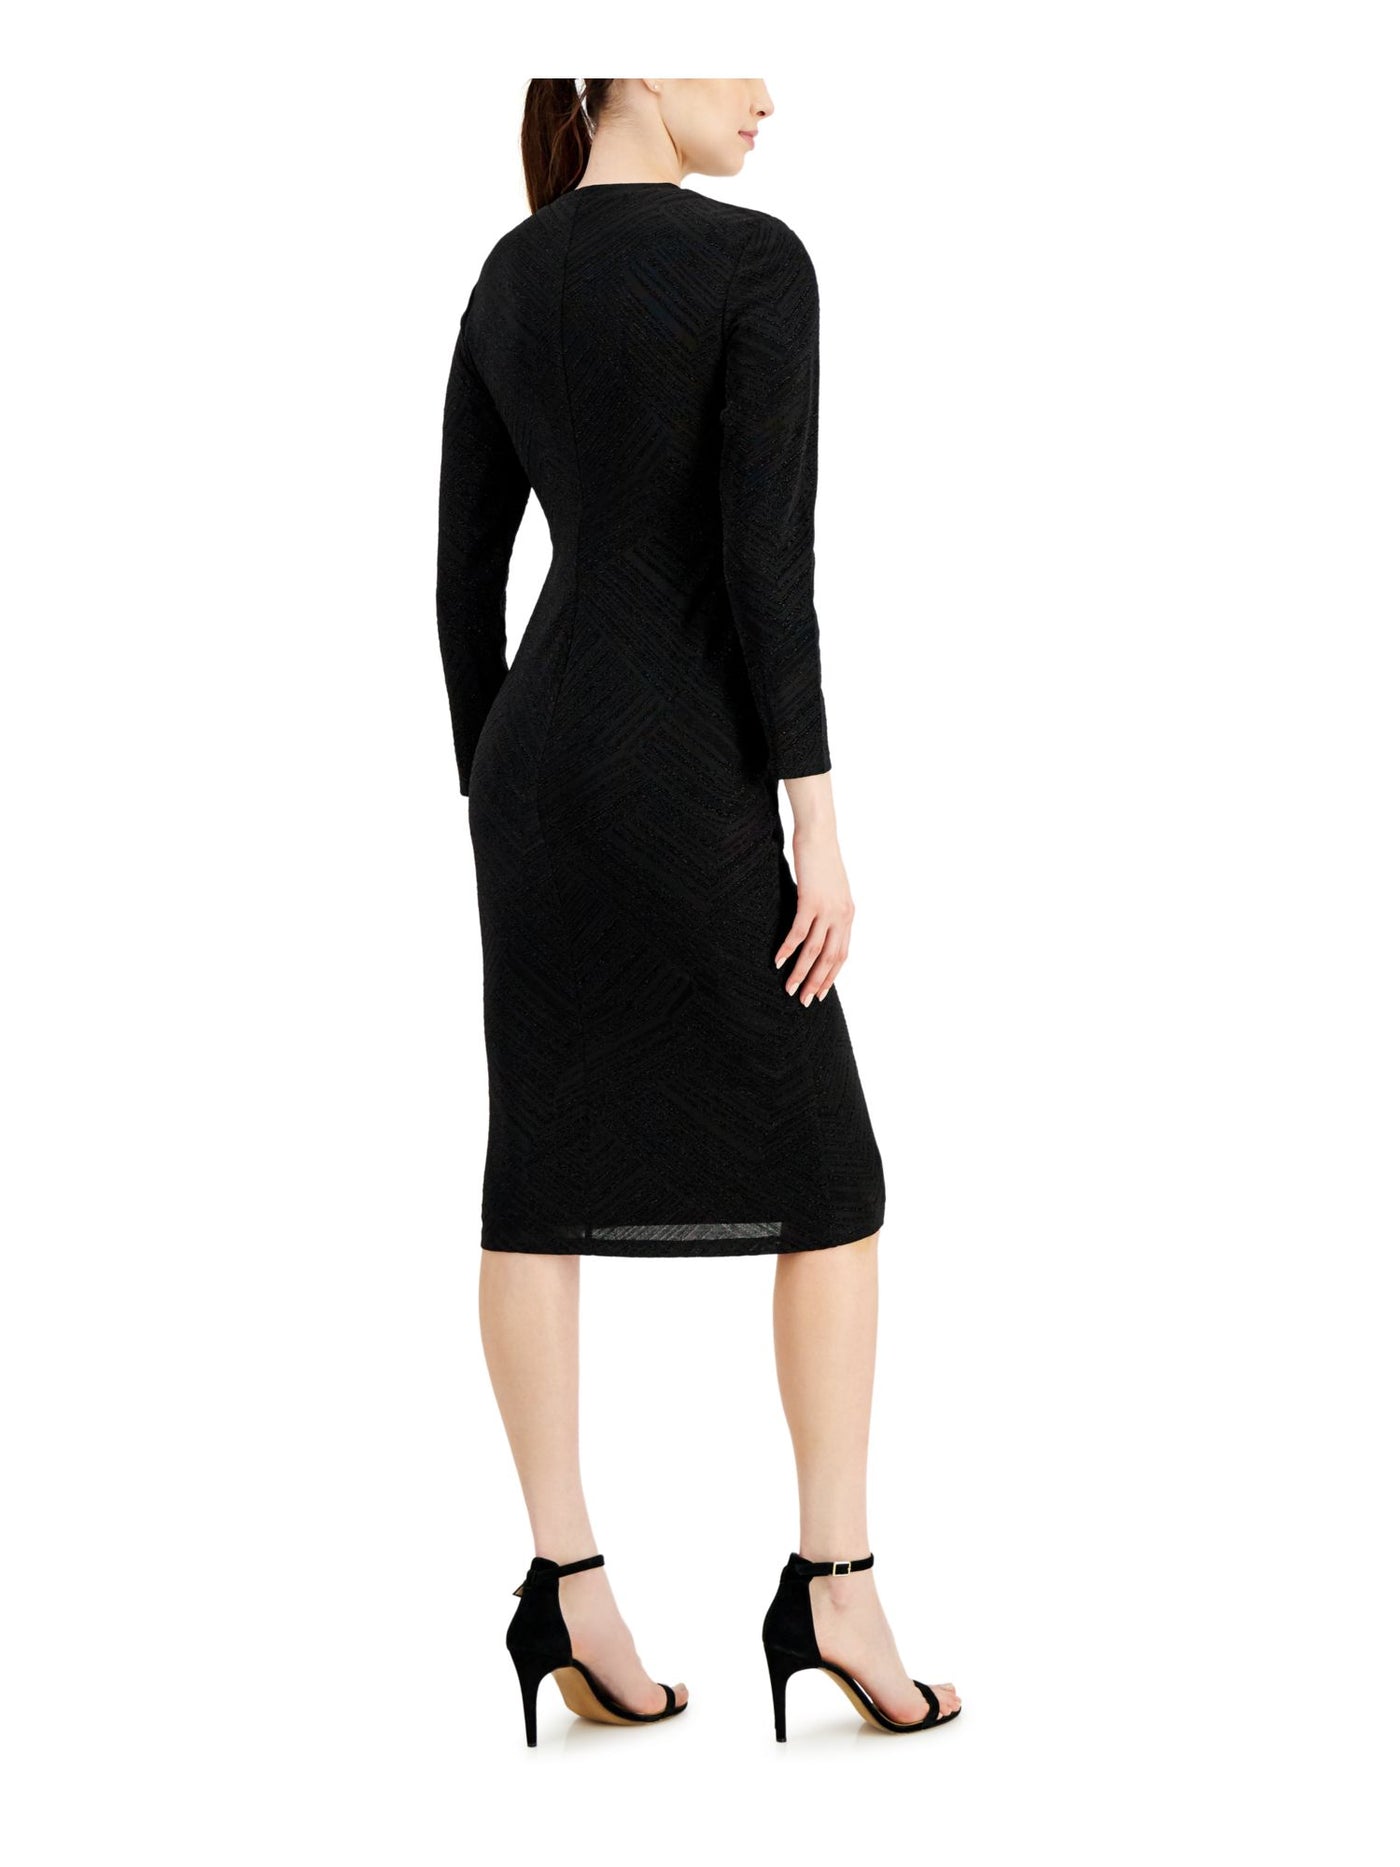 ANNE KLEIN Womens Black Textured Metallic Lined Pullover Long Sleeve Round Neck Below The Knee Wear To Work Body Con Dress 10